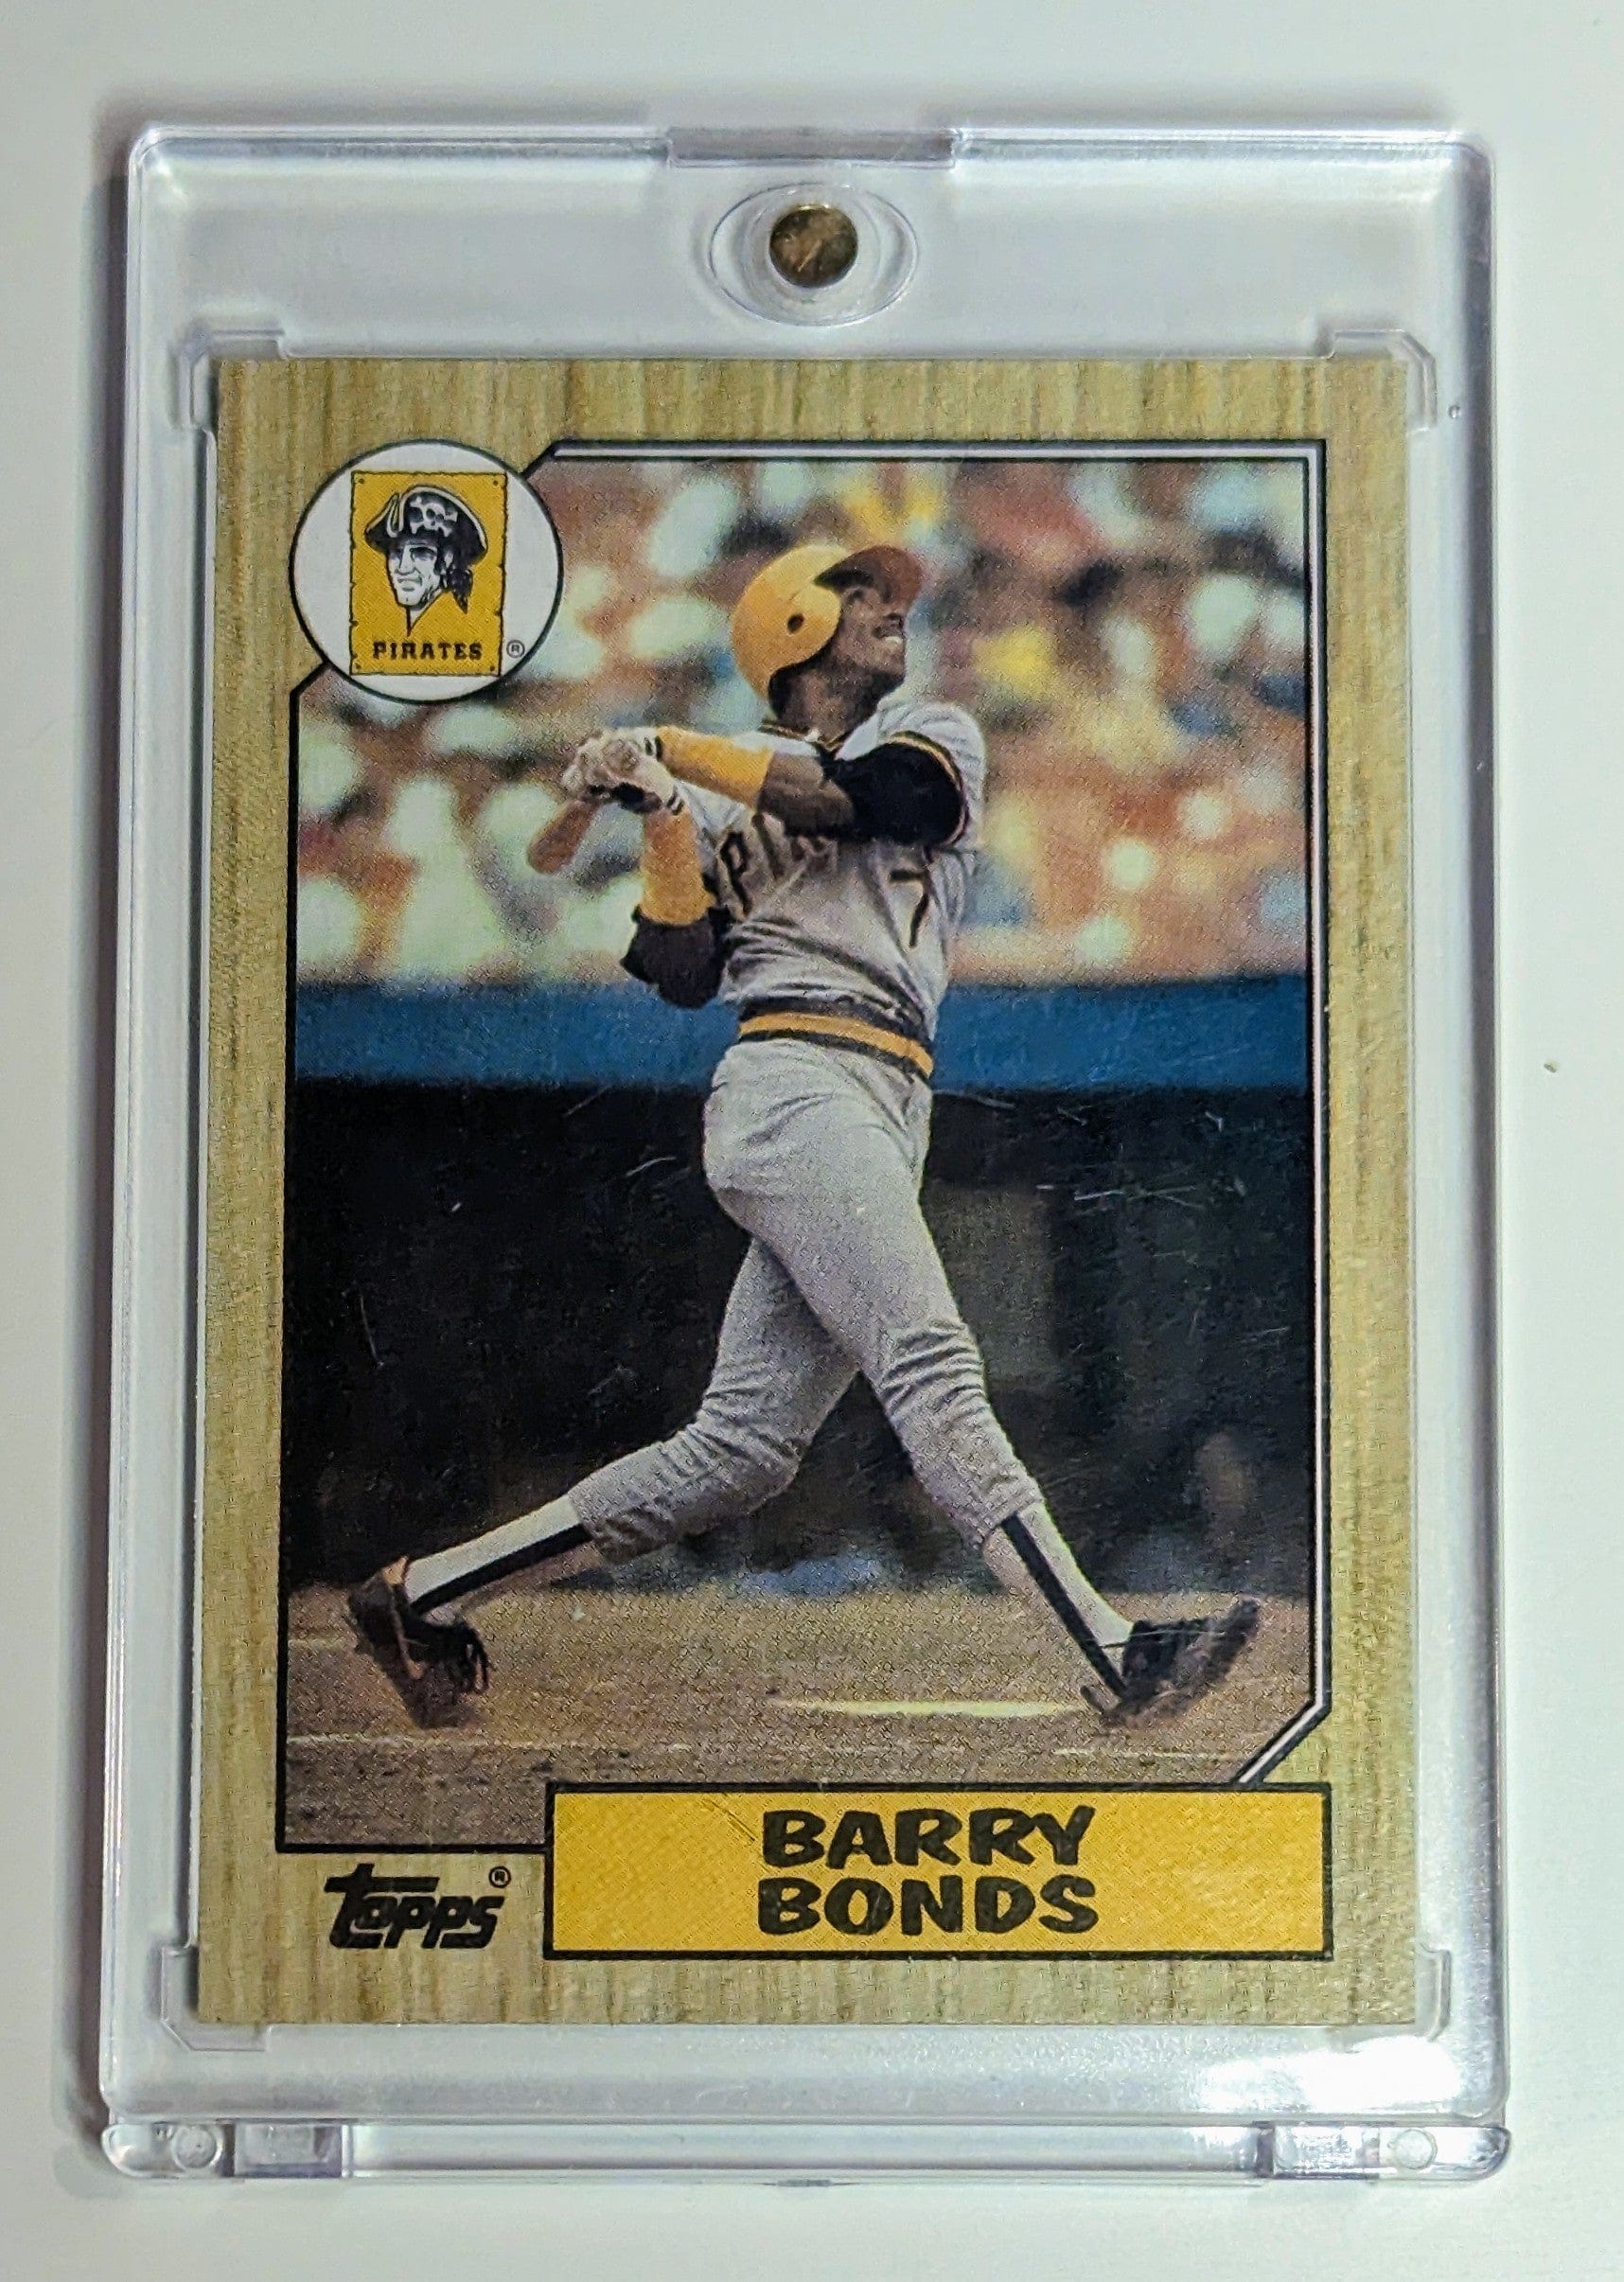 FIINR Baseball Card 1987 Topps Barry Bonds Rookie MLB Baseball Error Card #320 - Over 6 Errors - Very Rare - Mint Condition